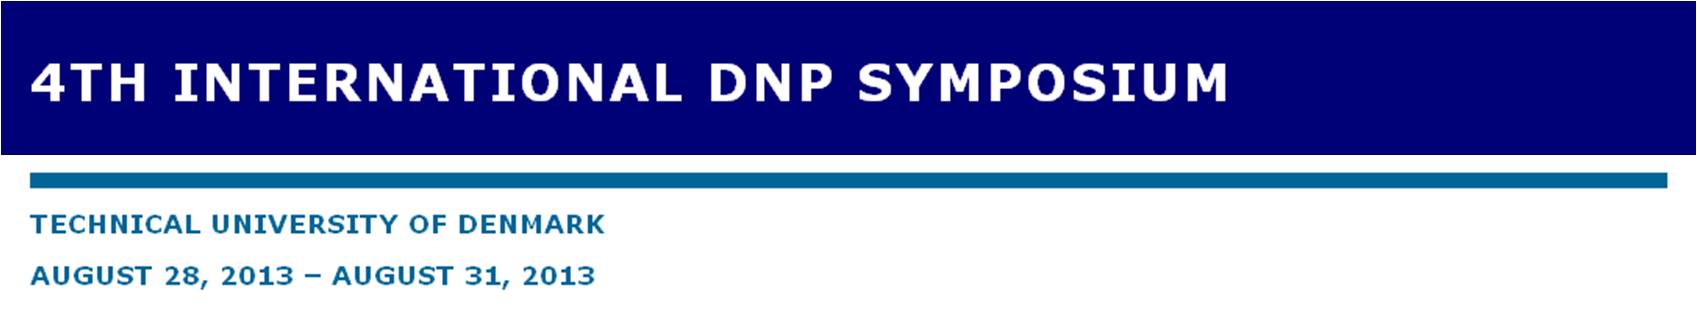 logo_DNP_symposium